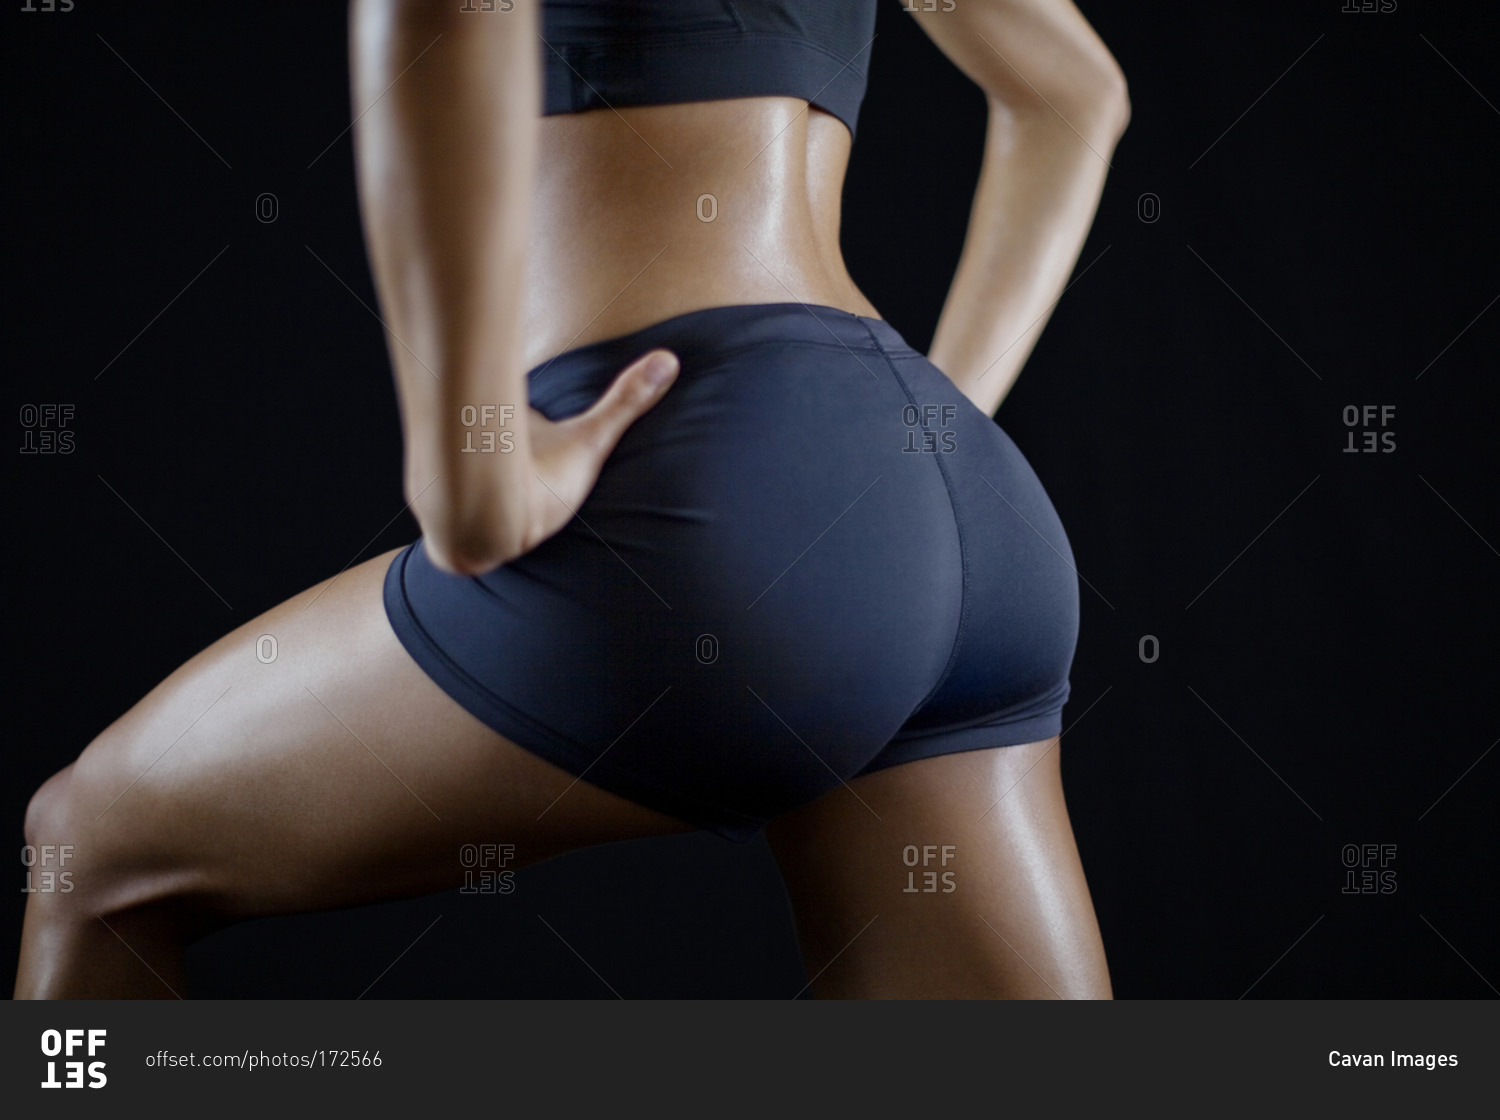 Woman in athletic underwear